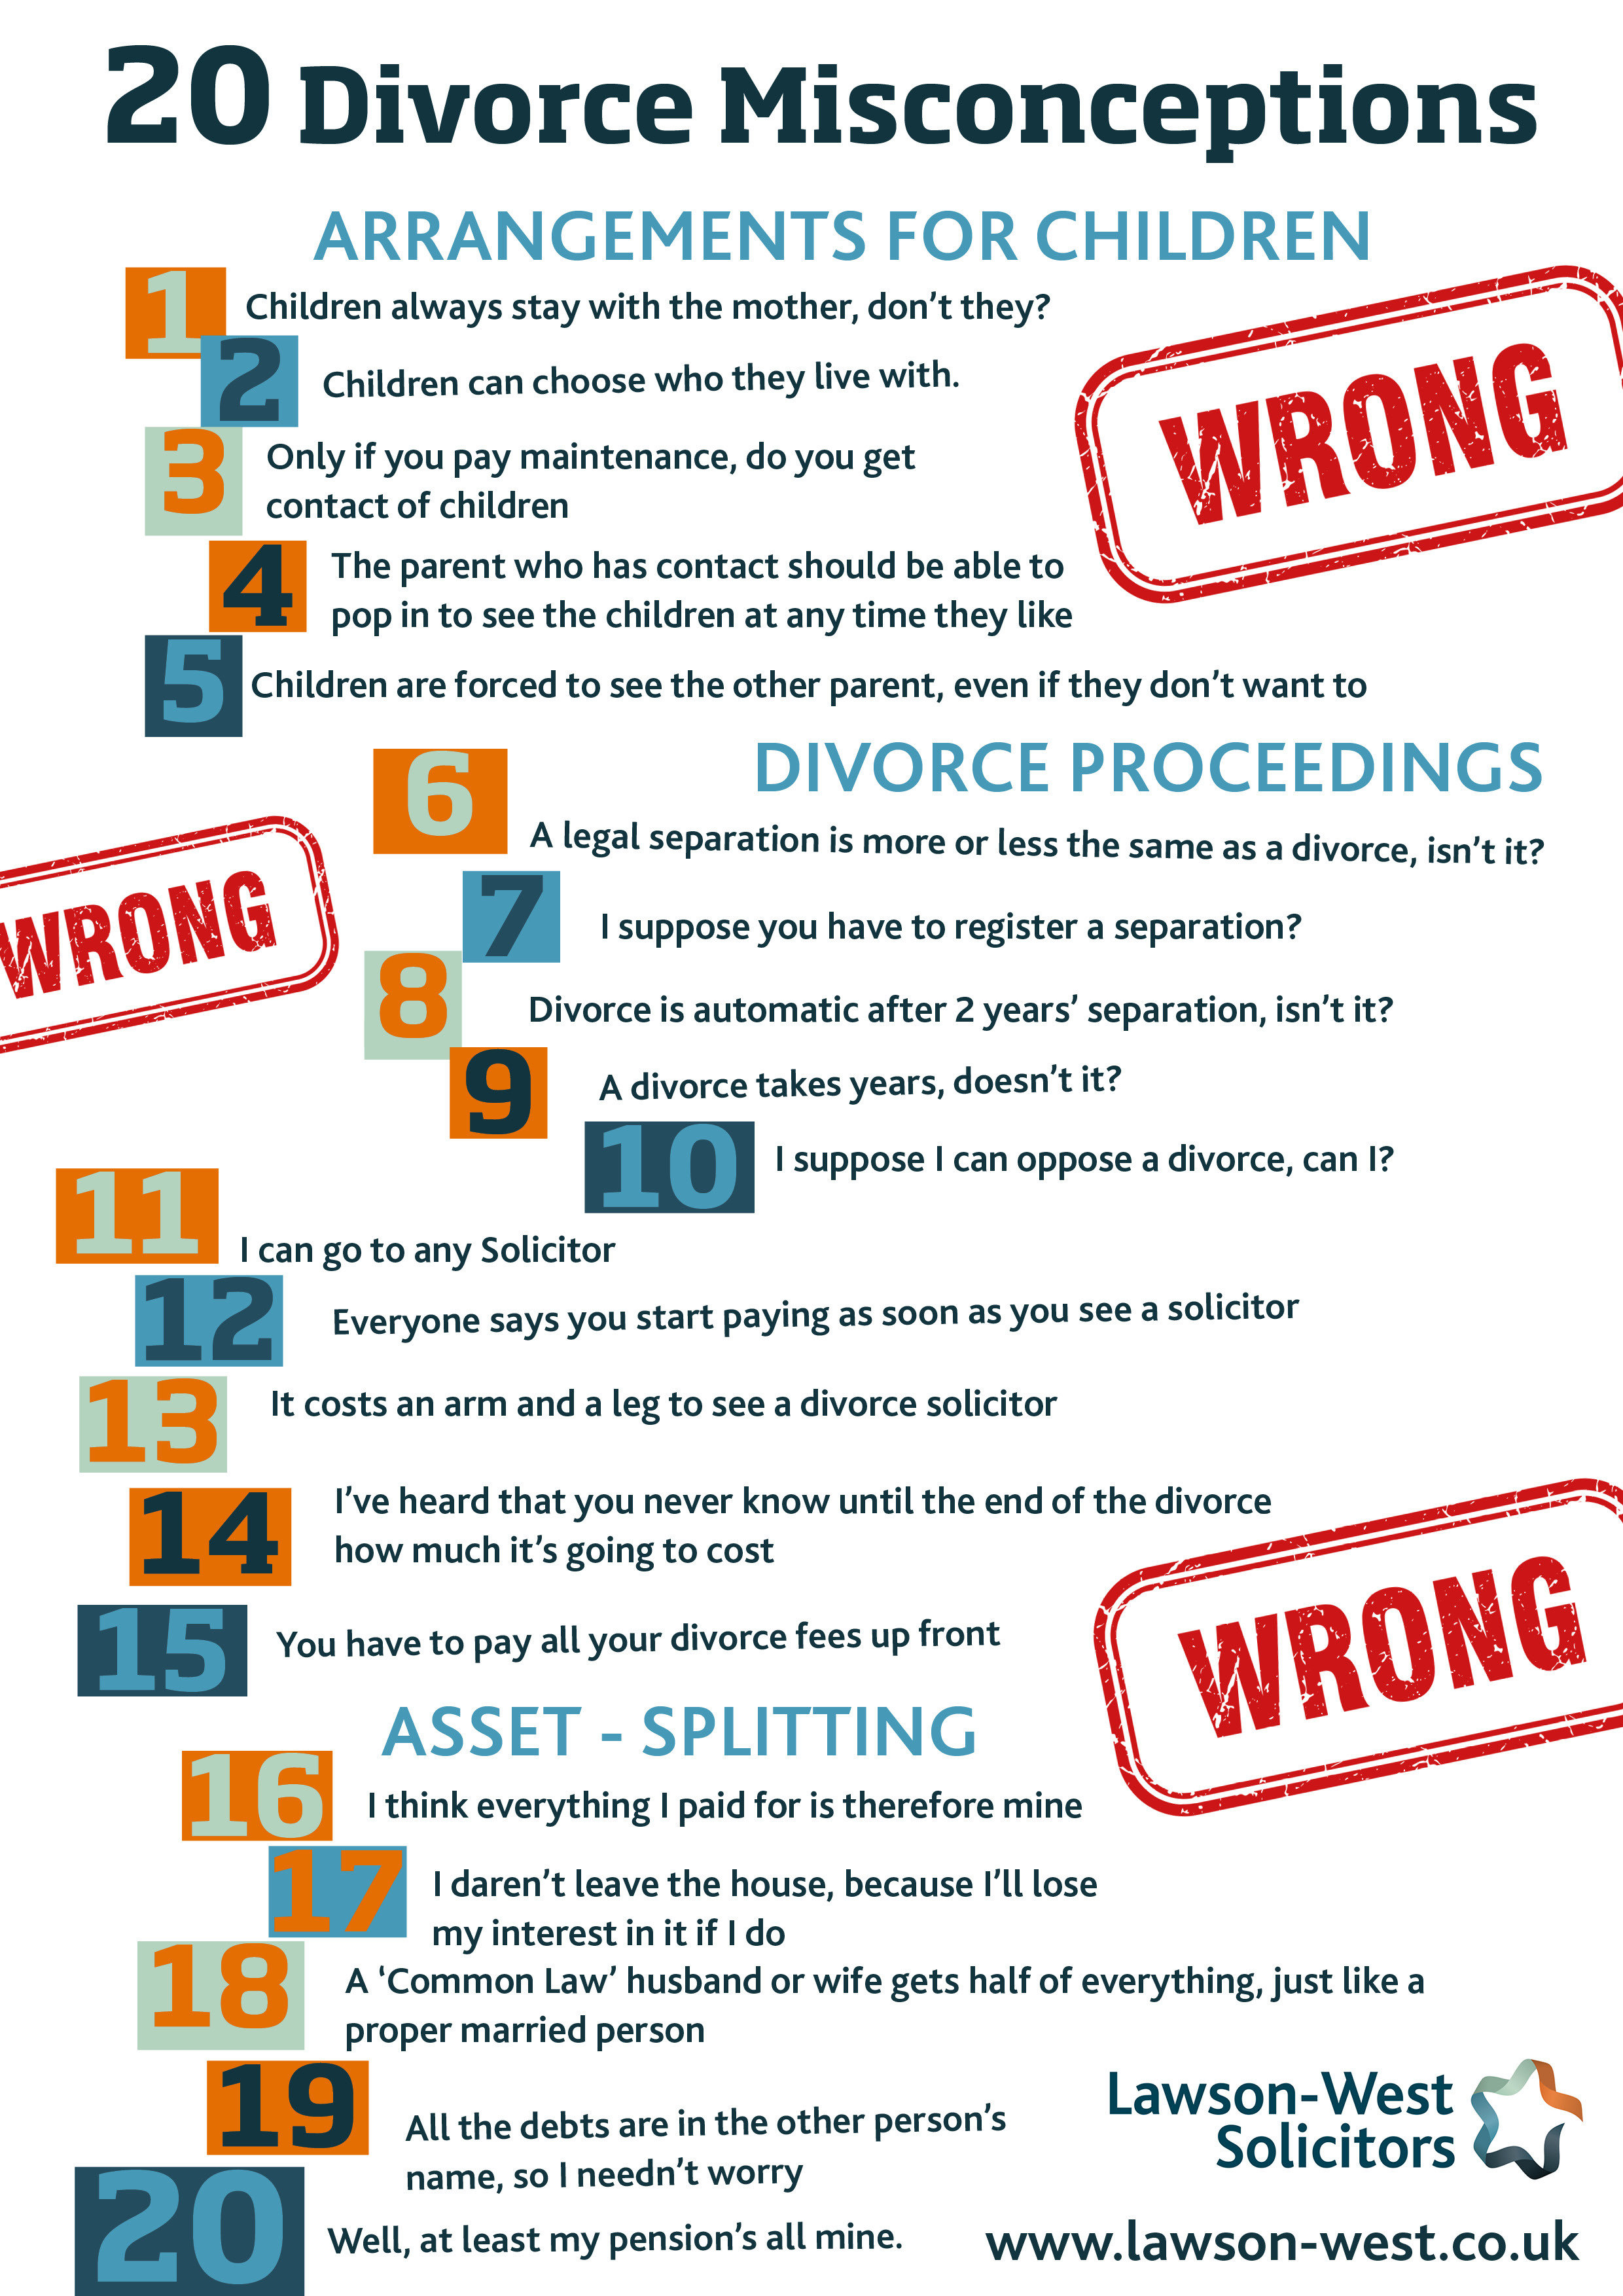 Divorce misconceptions